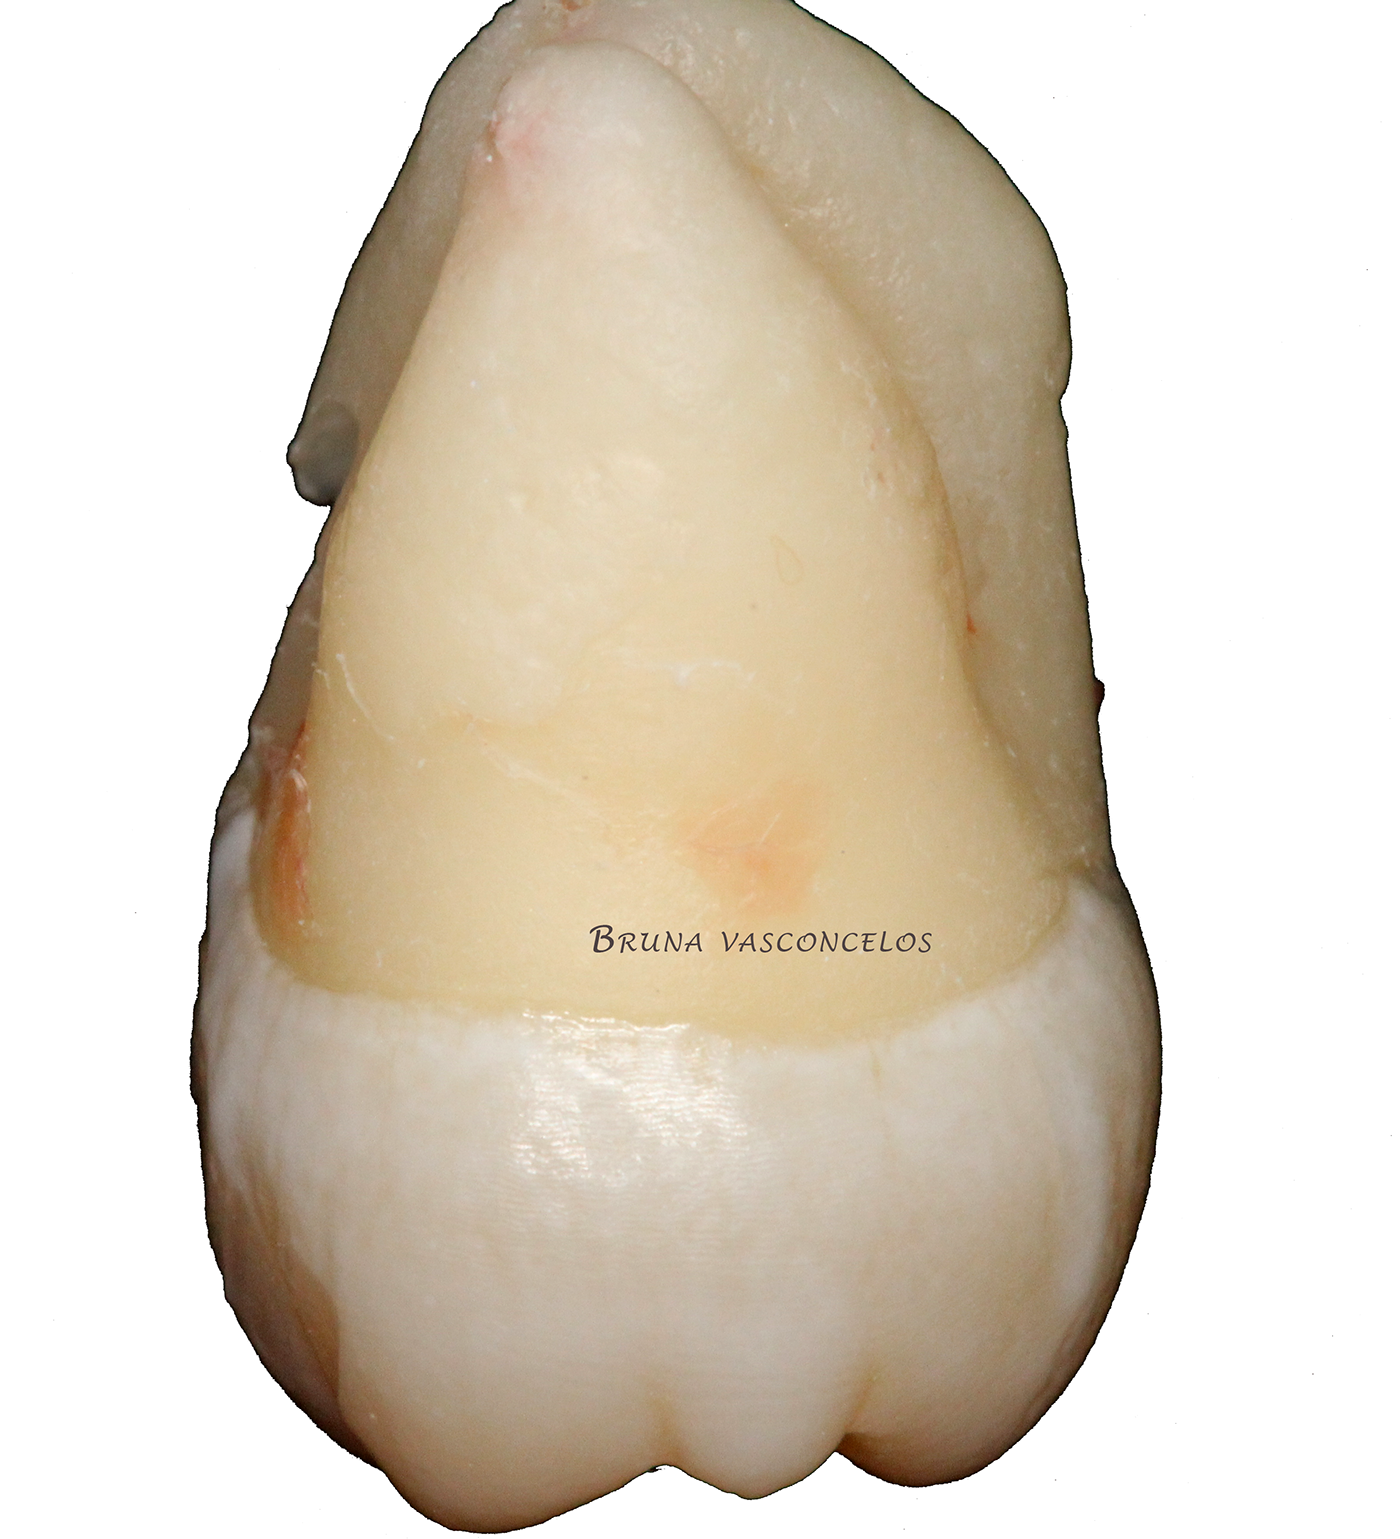 molar surgery oral photography dental anatomy third molar apical foramen periodontology endodontics dentistry oral medicine